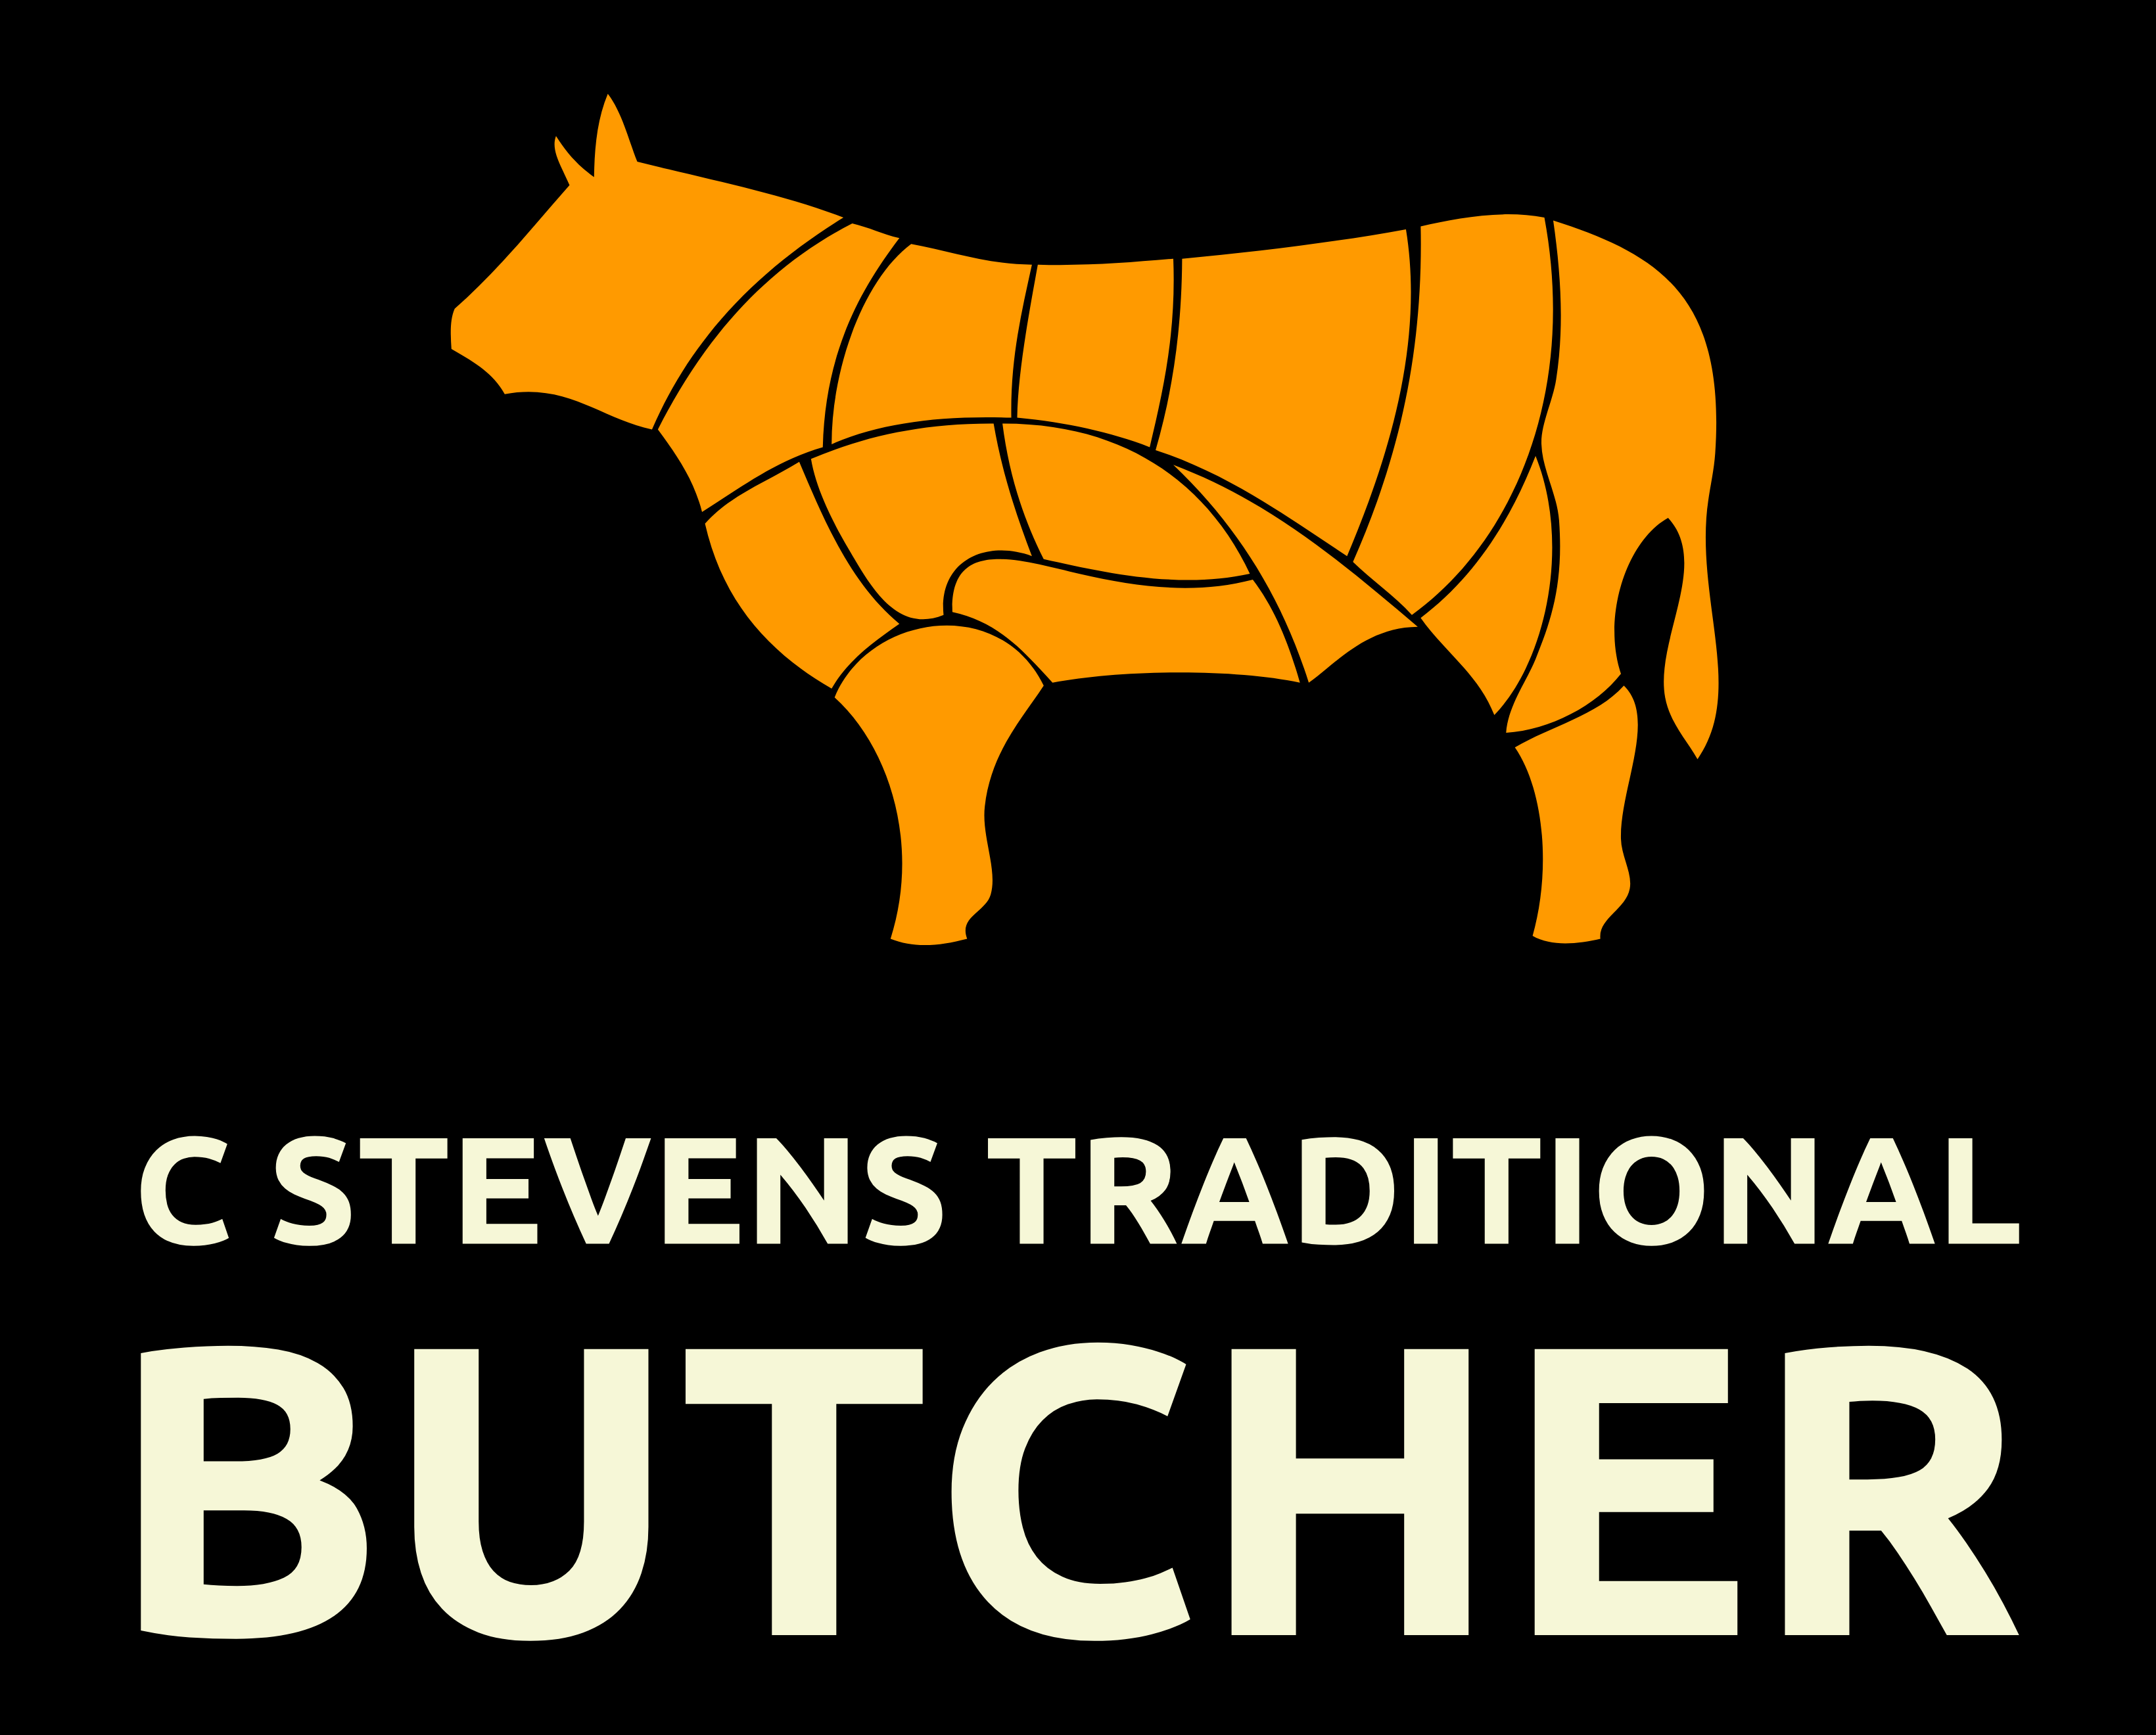 C Stevens Traditional Butcher